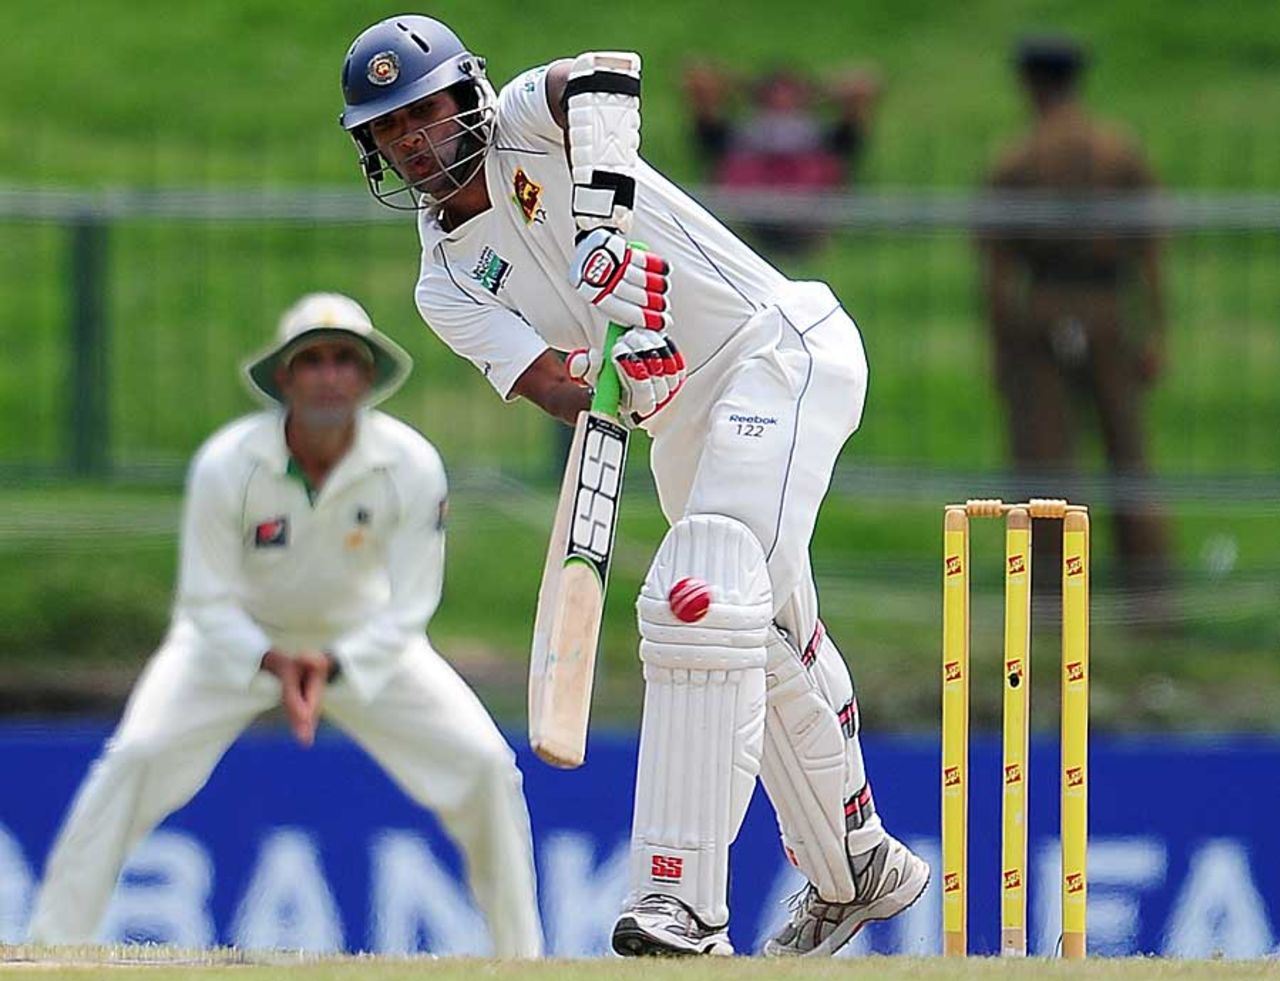 Dinesh Chandimal delivered a positive start for Sri Lanka, Sri Lanka v Pakistan, 3rd Test, Pallekele, 5th day, July 12, 2012